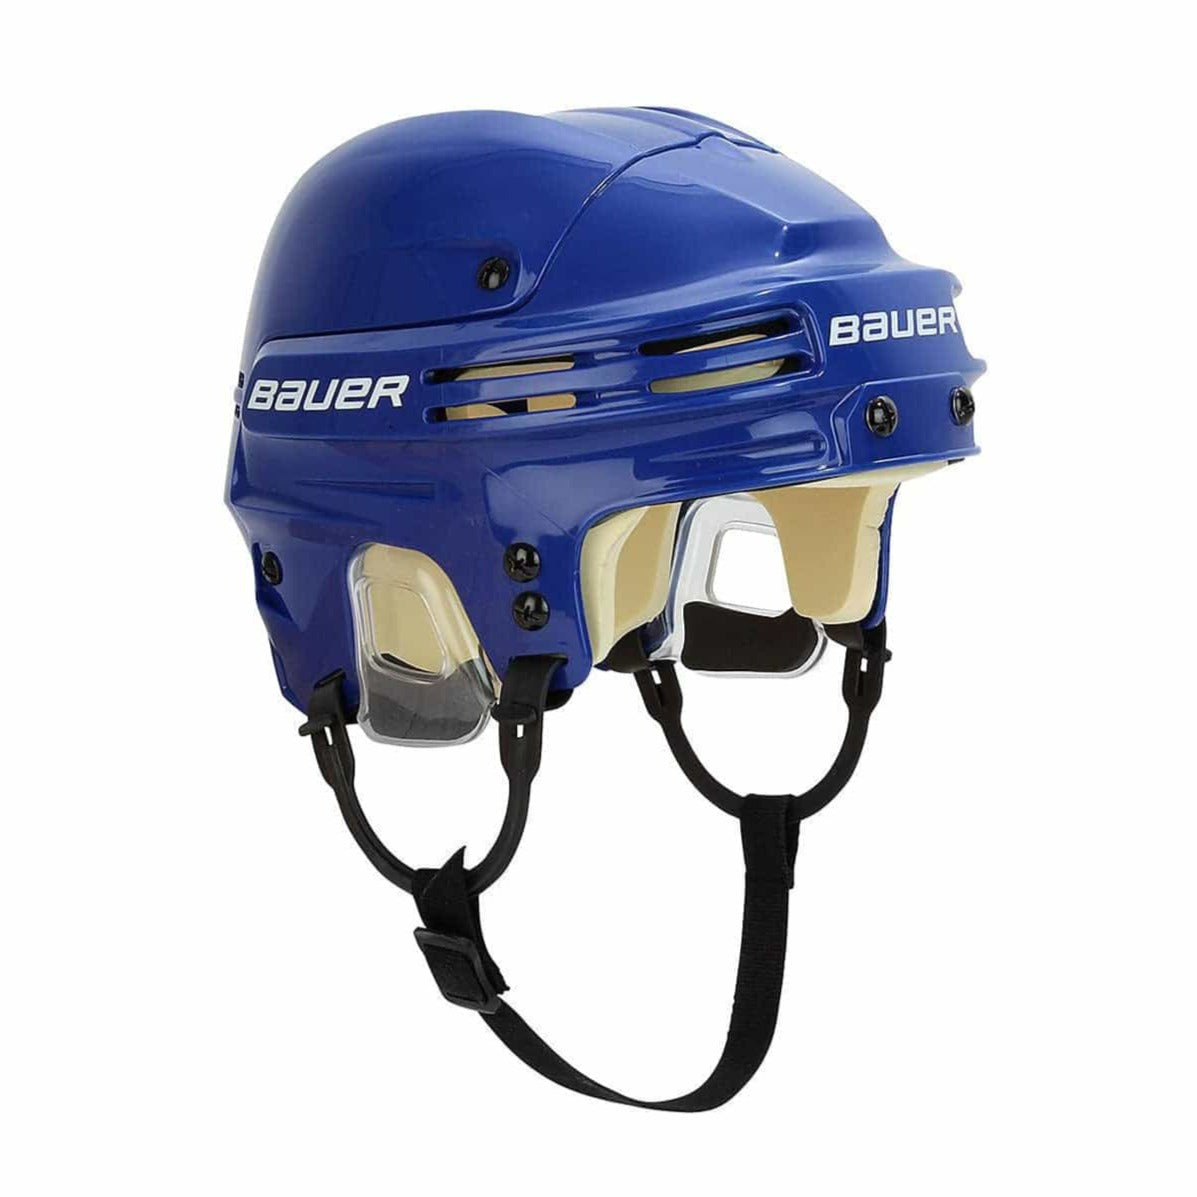 Bauer 4500 Hockey Helmet - The Hockey Shop Source For Sports